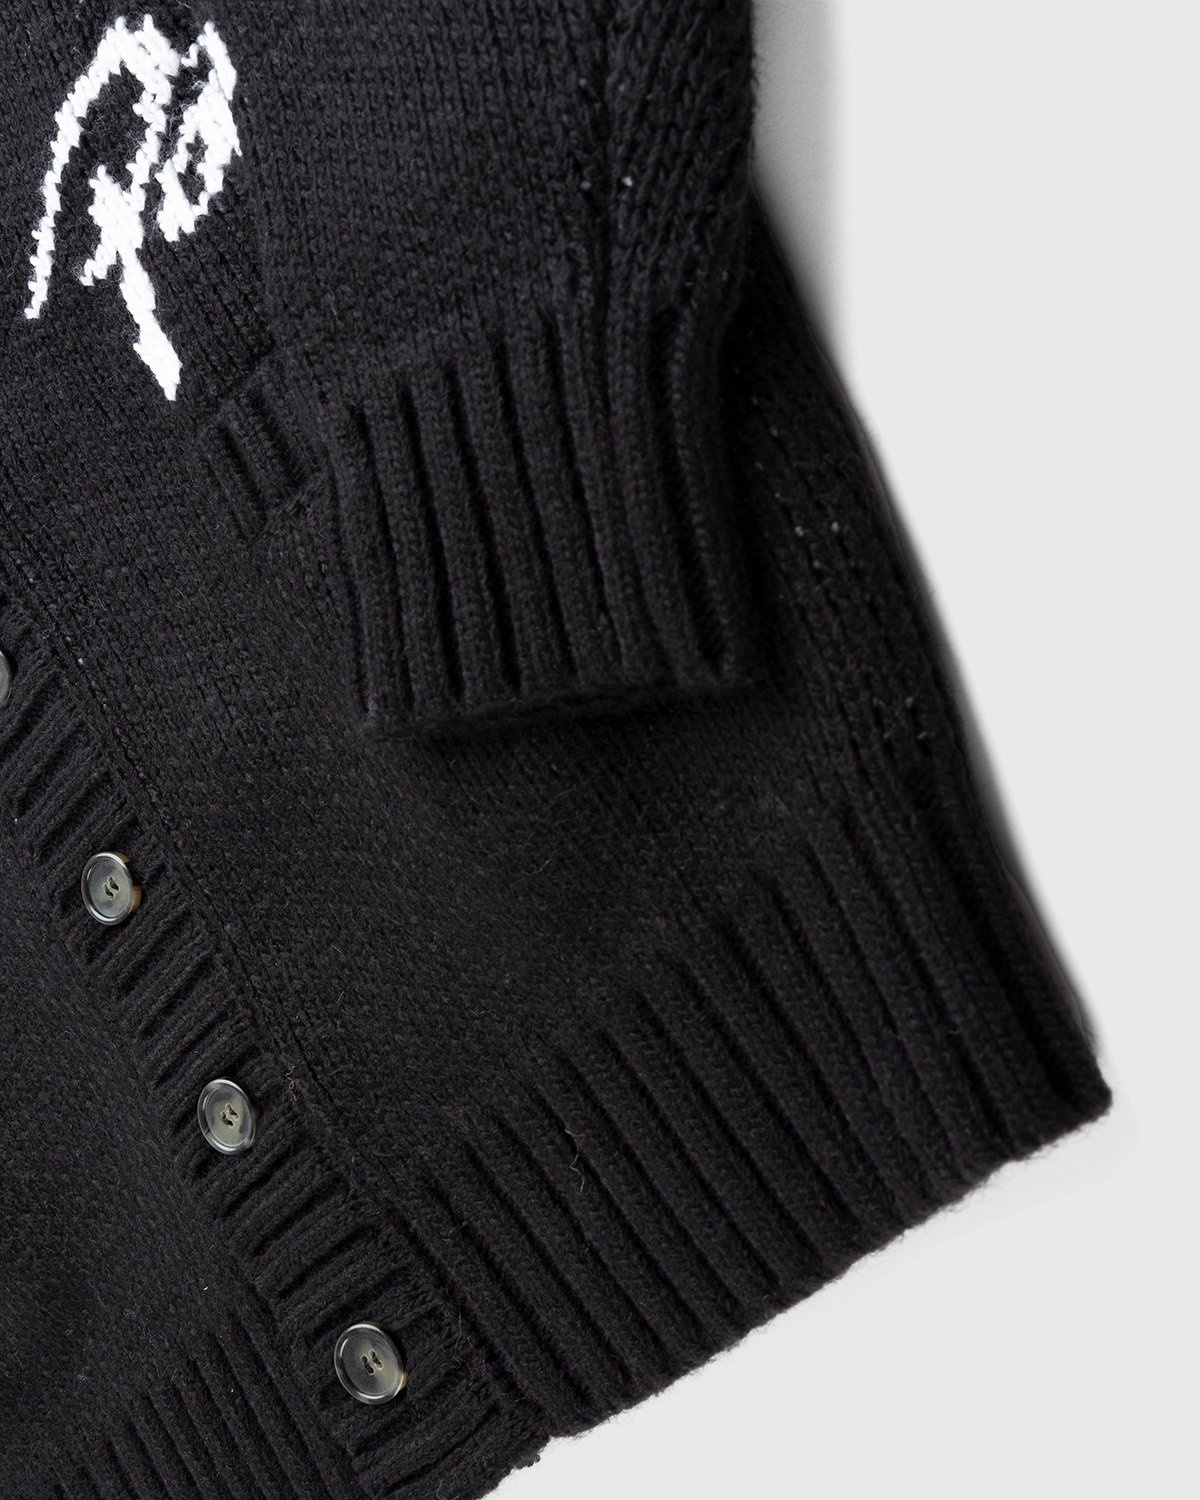 Patta – Roses Knitted Cardigan Black - Knitwear - Black - Image 4